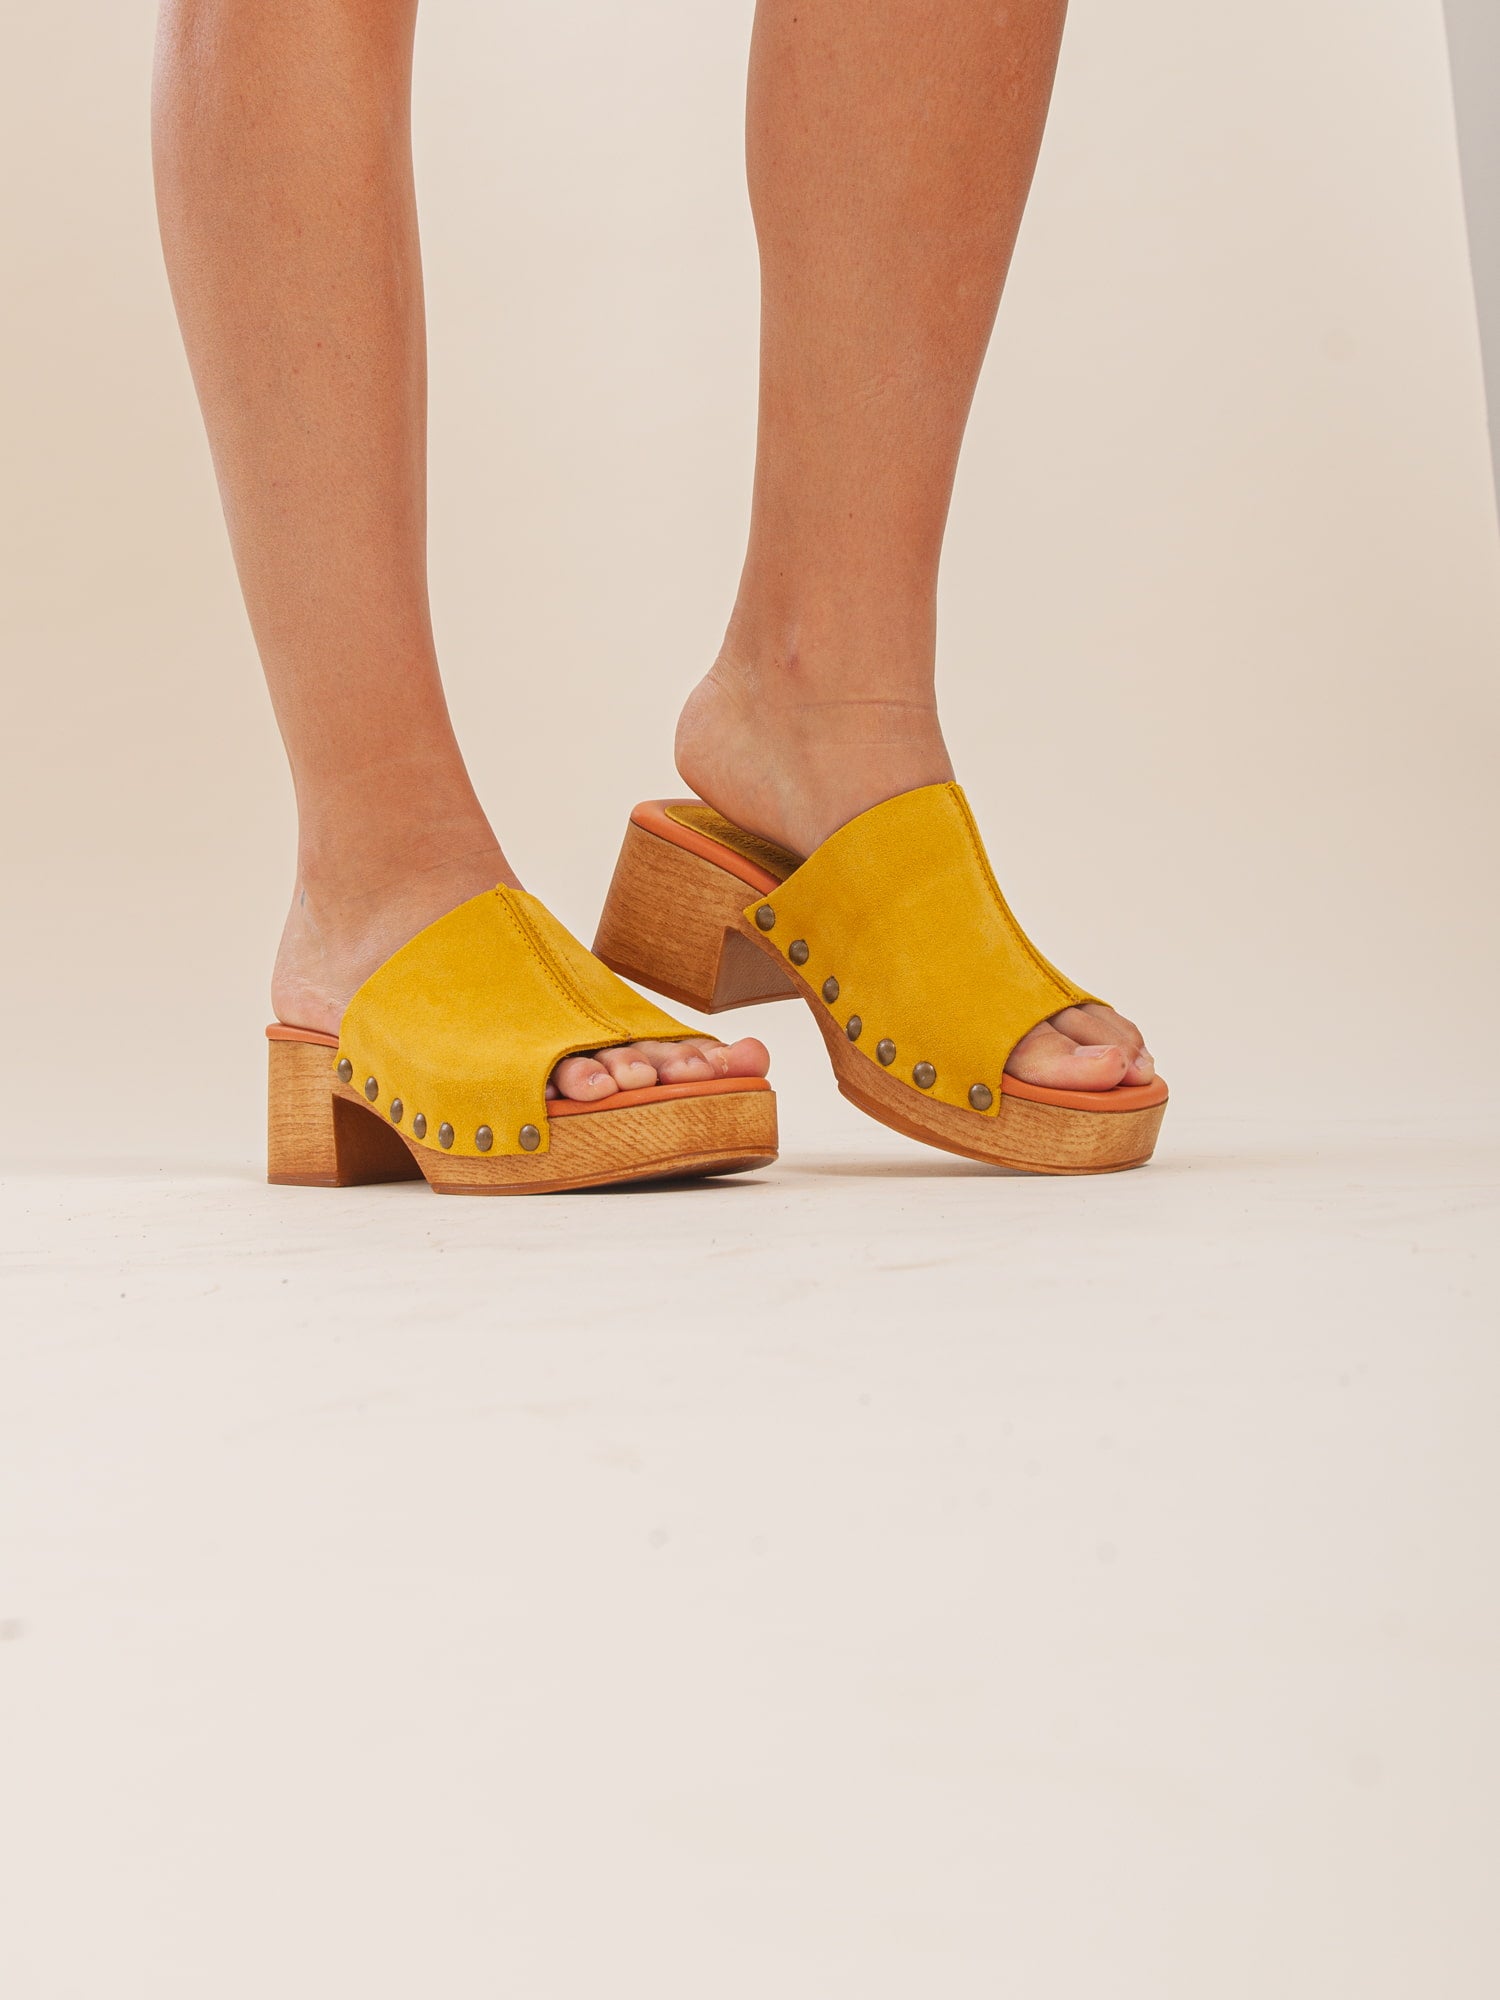 Sandalias de tacón ancho cómodos para mujer. Sandalias ligeros de uso diario.